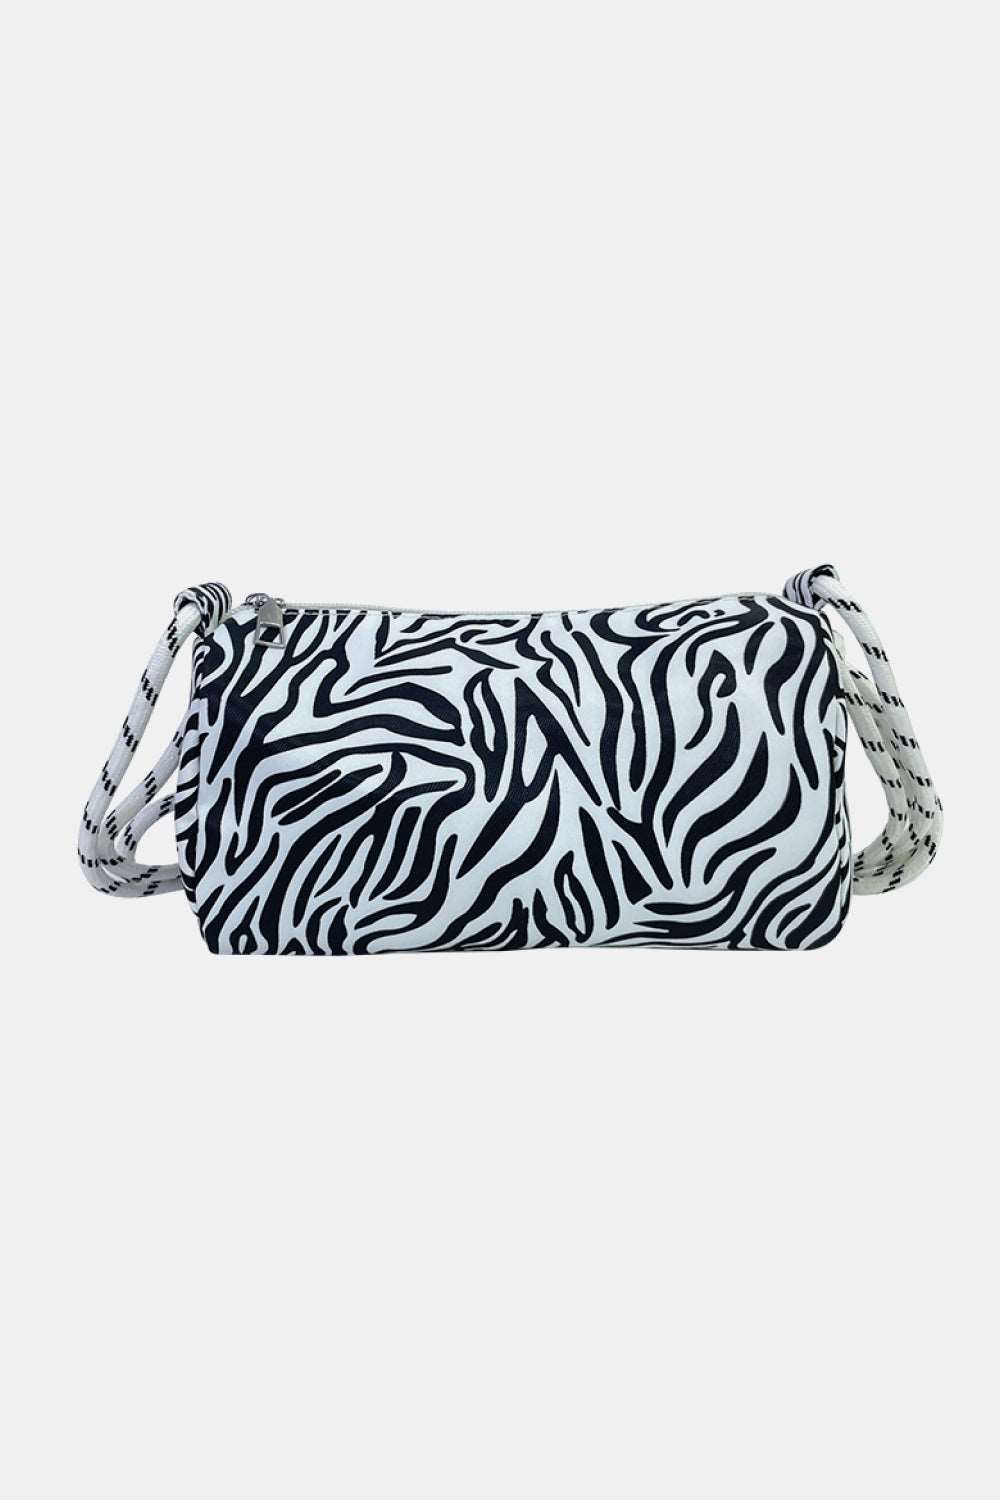 Animal Print Nylon Handbag